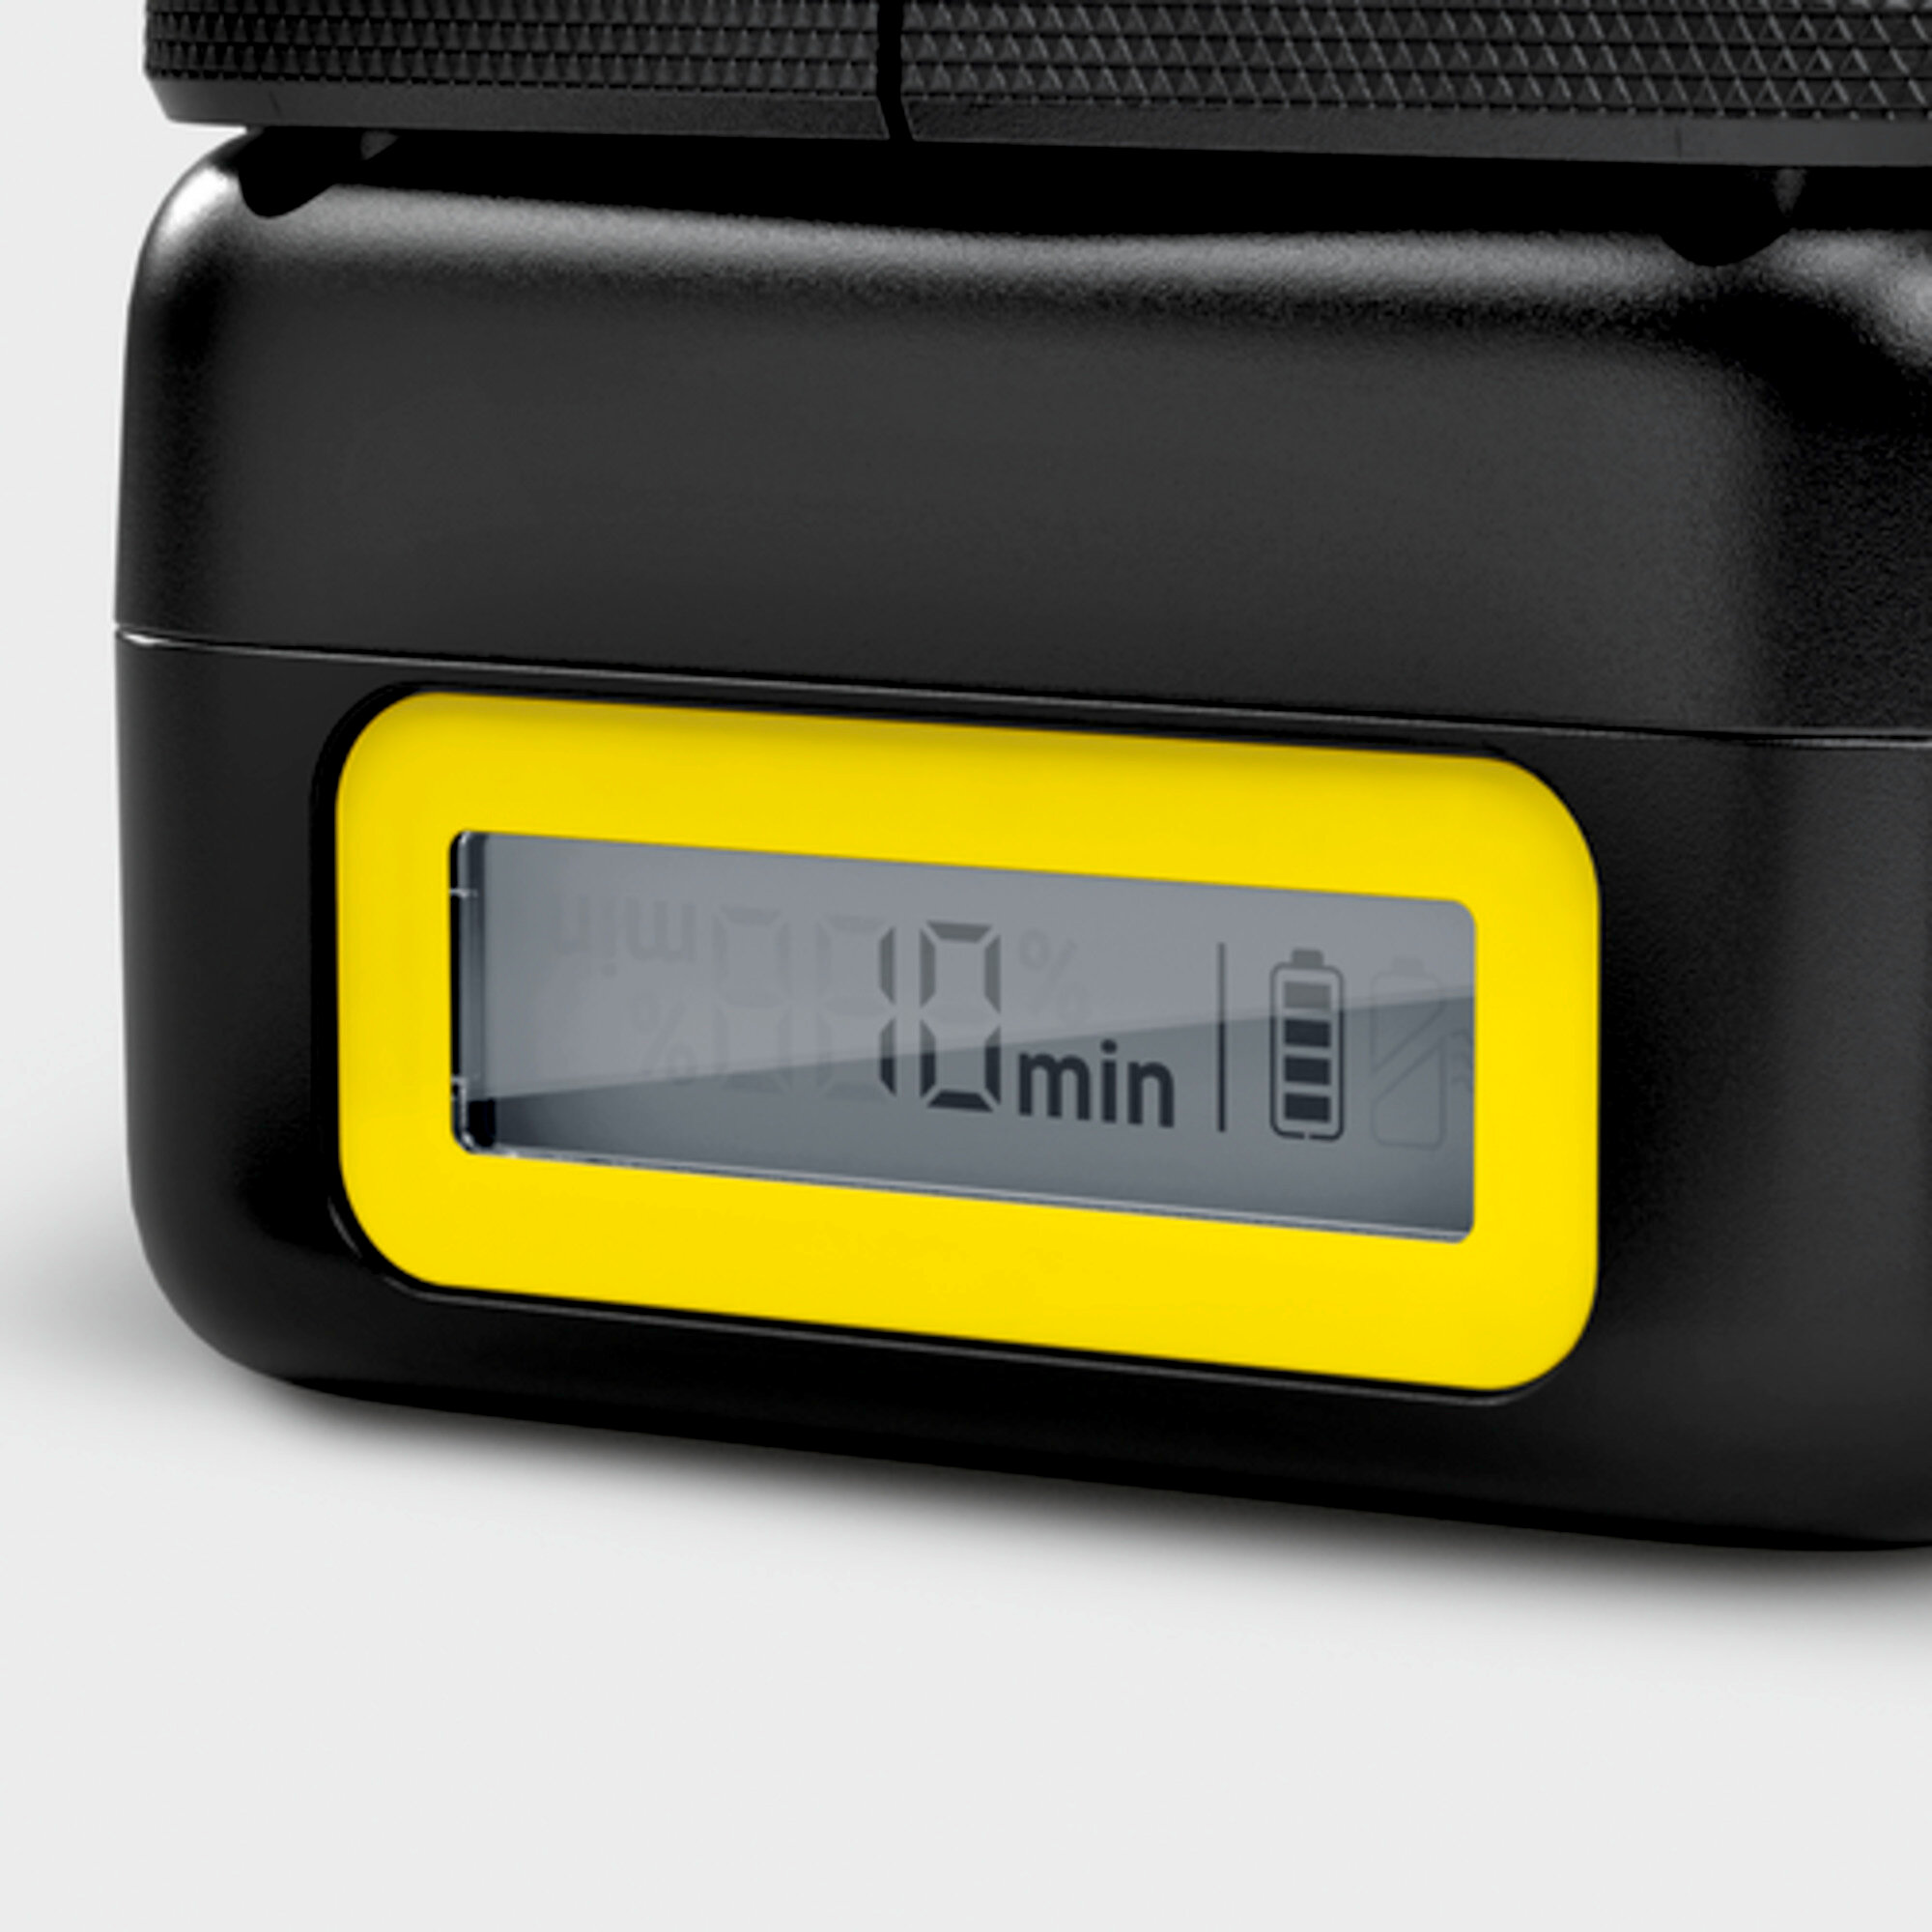  Starter kit Battery Power 18/25: Tehnologie inovatoare în timp real